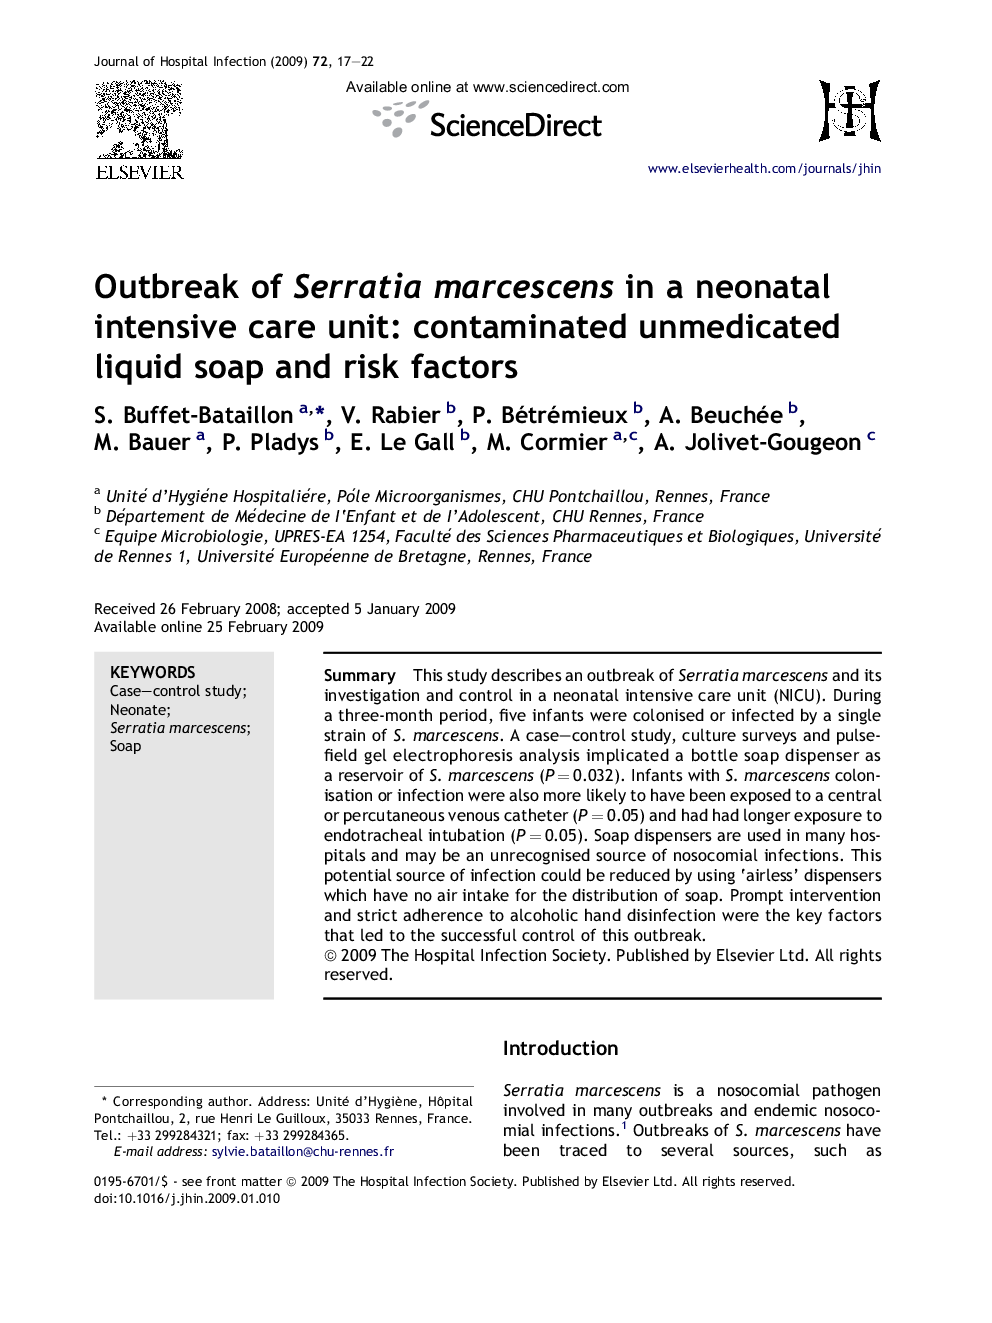 Outbreak of Serratia marcescens in a neonatal intensive care unit: contaminated unmedicated liquid soap and risk factors